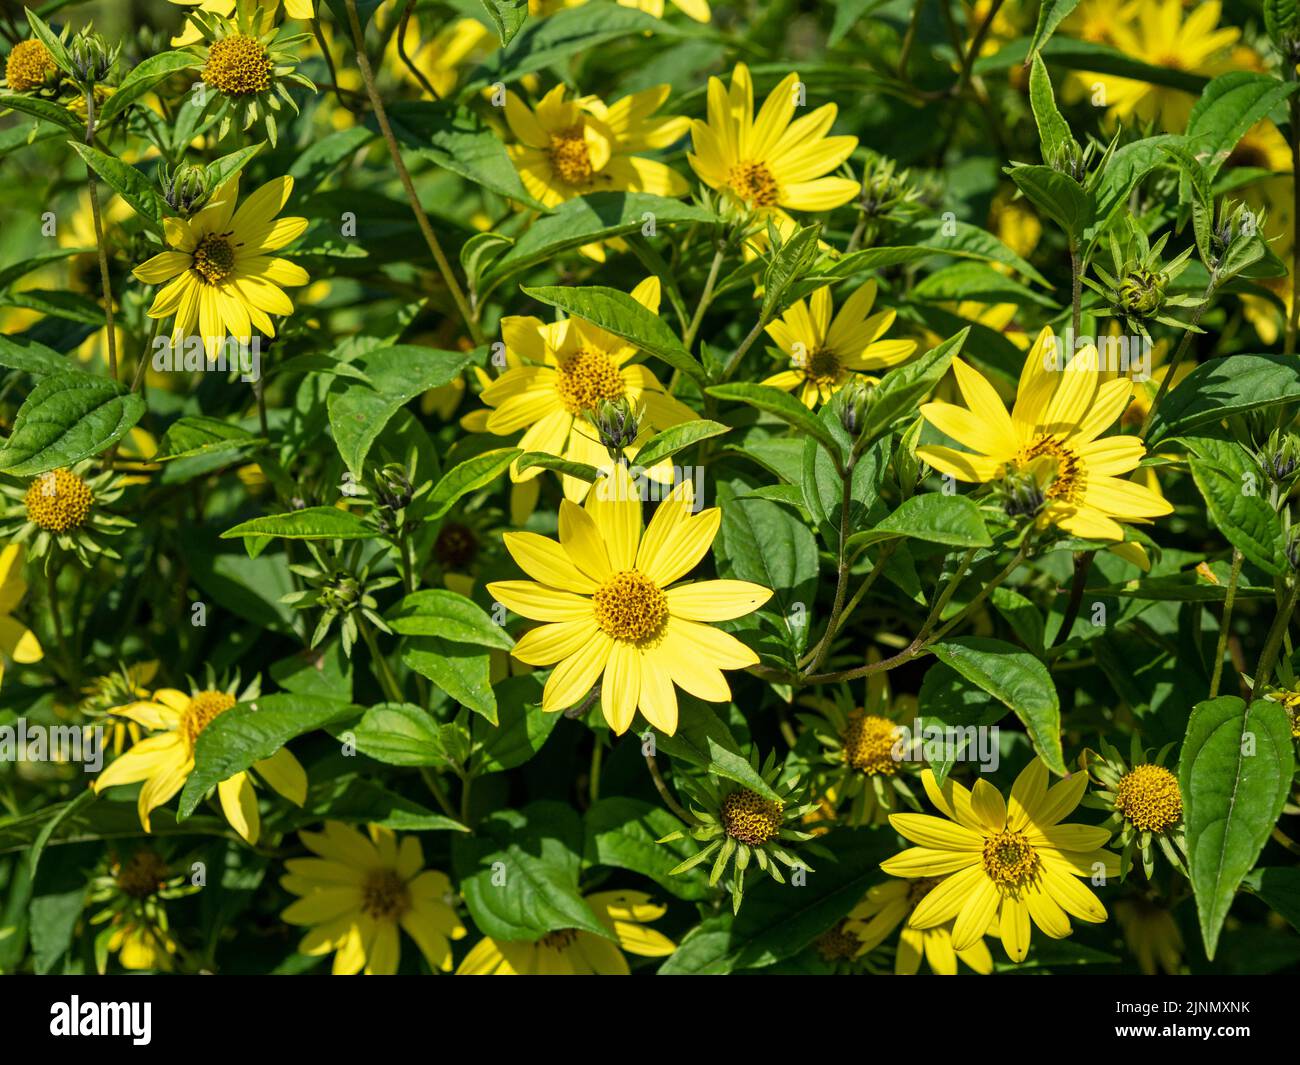 Narrowleaf sunflowers Helianthus angustifolius flowering in a garden Stock Photo